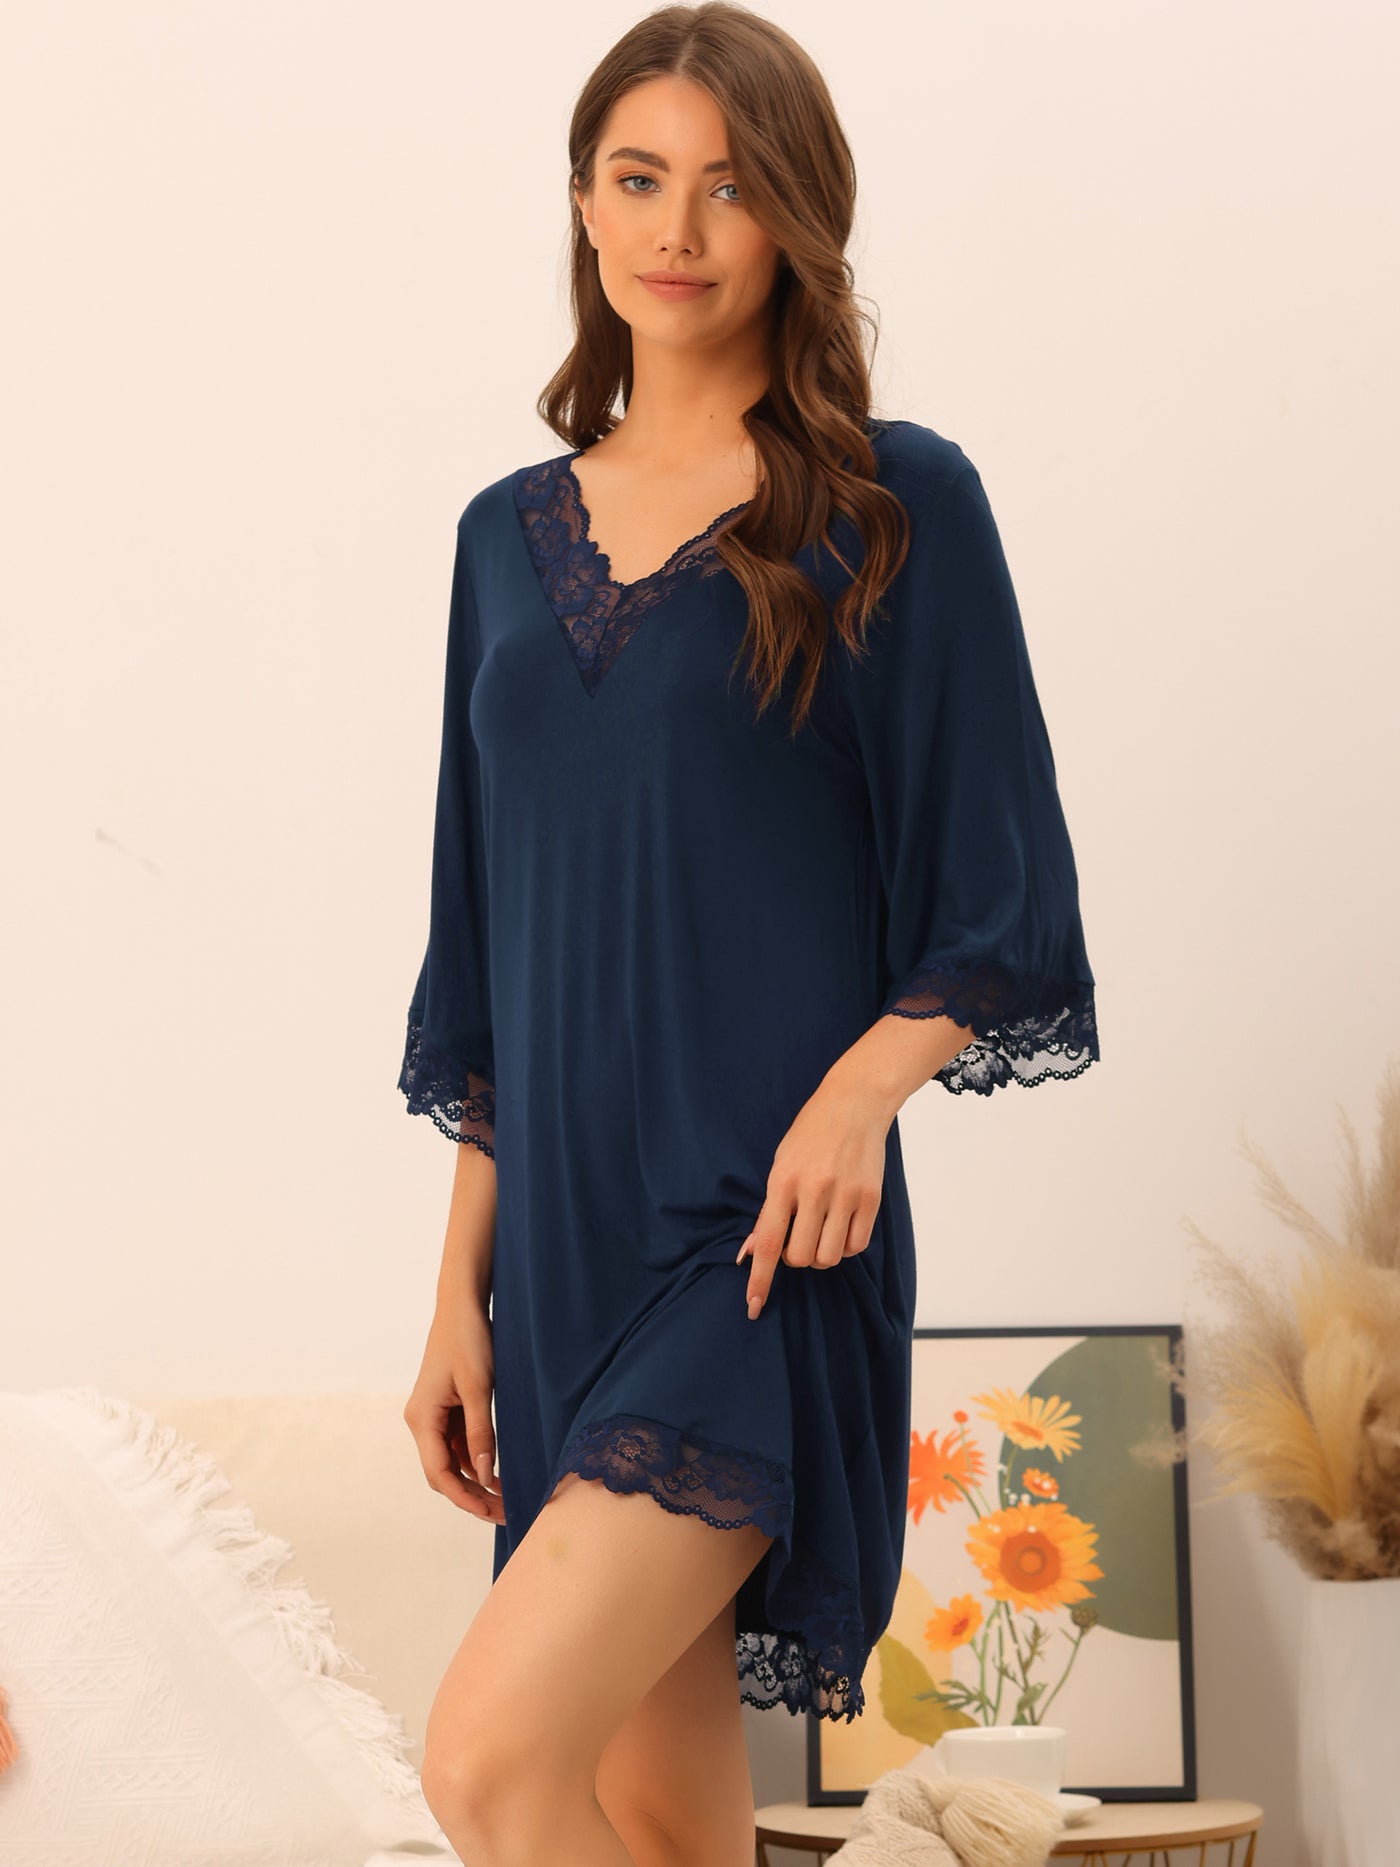 Bublédon Womens Lace Nightshirt Soft Half Sleeve Sleepshirt Loungewear Pajama Nightgown